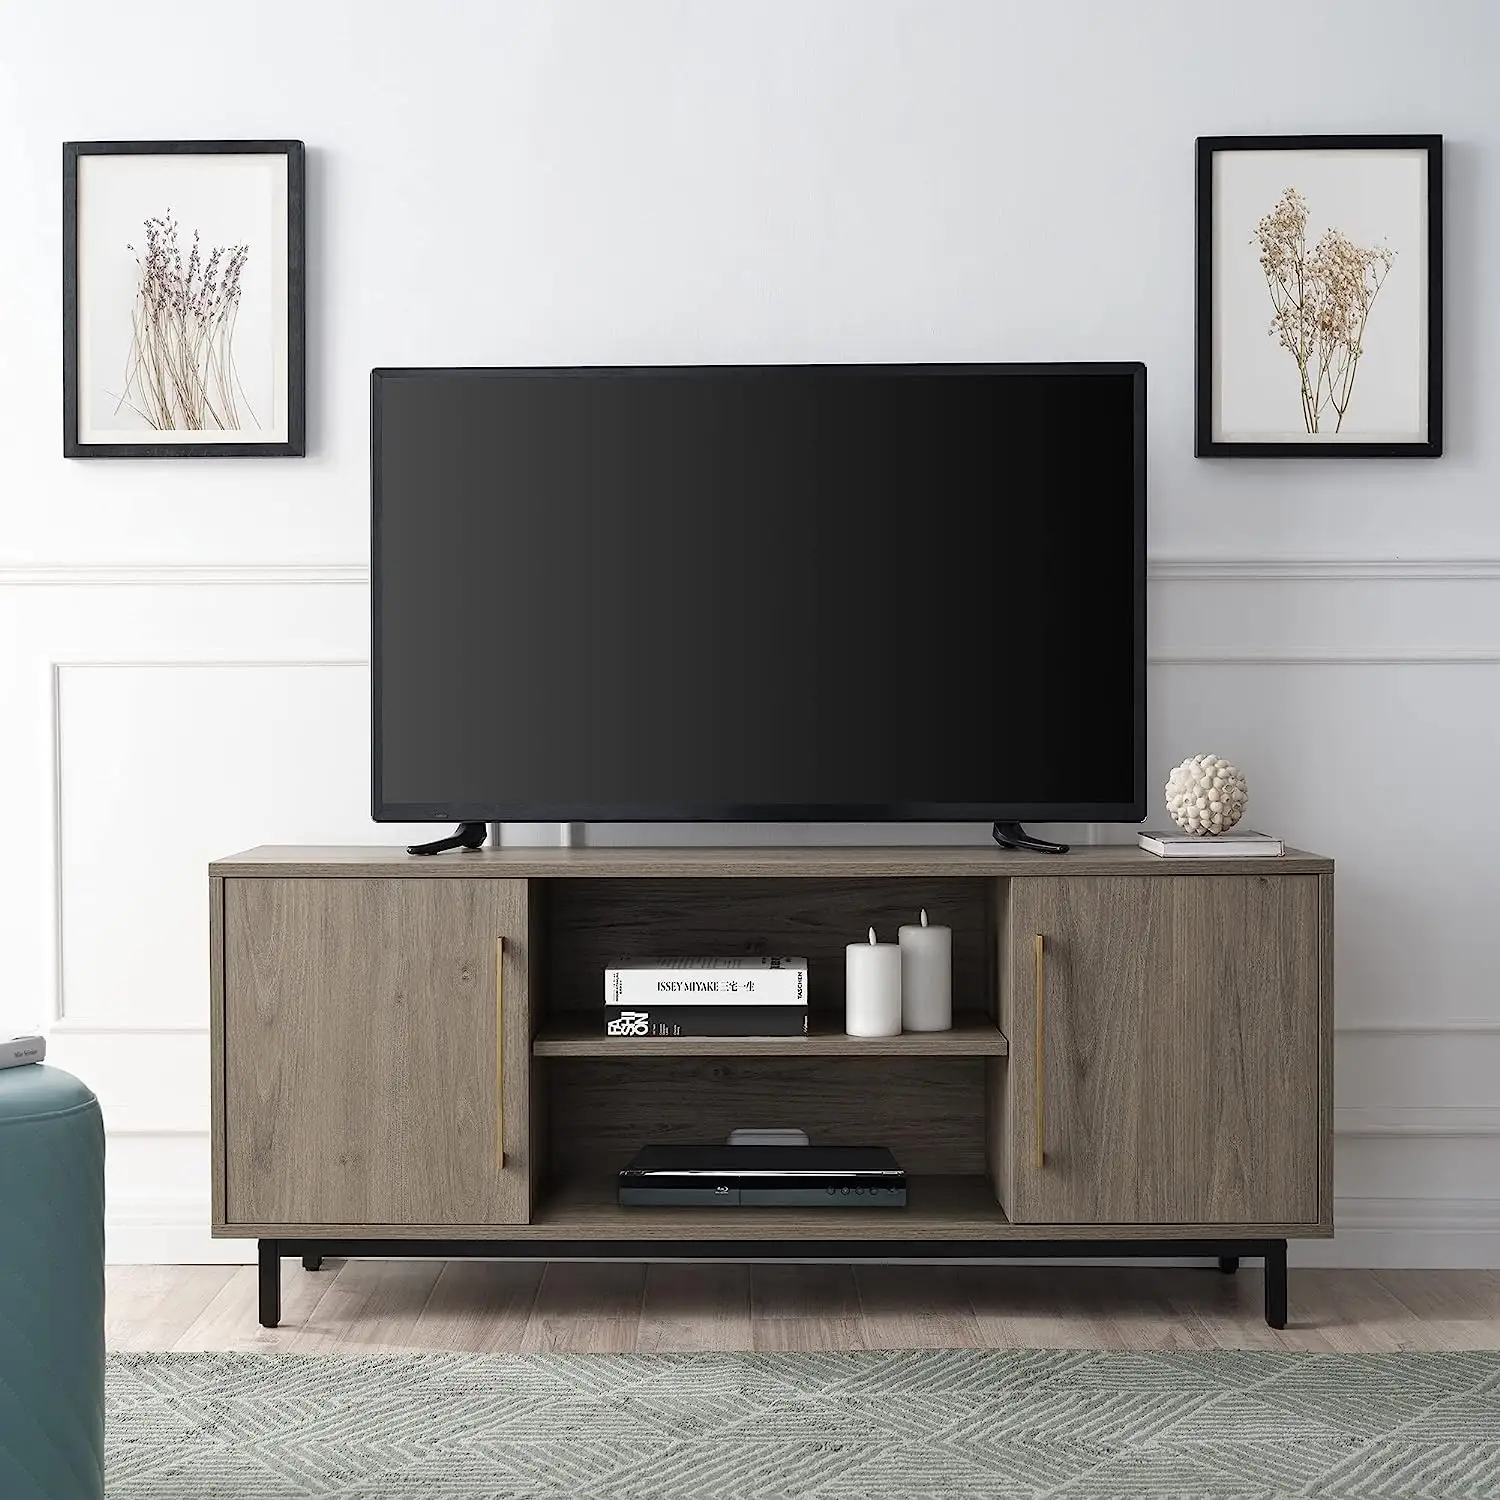 Livingrルーム家具中国供給長方形MDFボードテーブルコーナー木製キャビネットTVスタンド